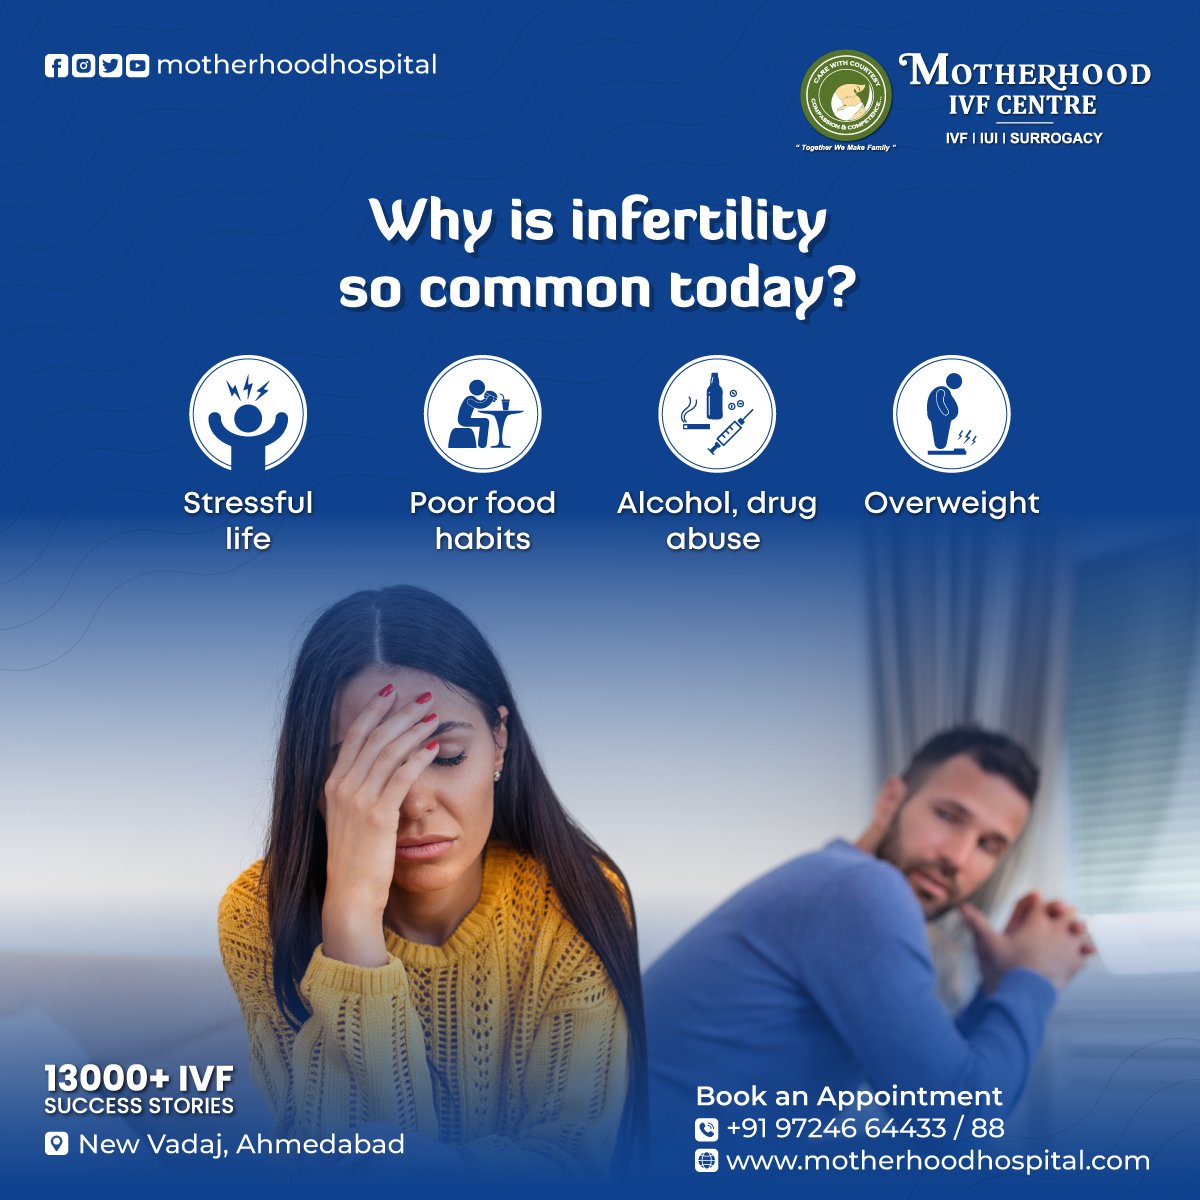 Unhealthy habits can harm fertility. Let's make positive changes for a brighter reproductive future.

Call: +91 9724664433/88
Visit: motherhoodhospital.com/ivf-center-in-…

#MotherhoodIVFCenter #Infertility #IVF  #IVFCenter #IVFTreatment #Ahmedabad #NewVadaj #MotherhoodHospital